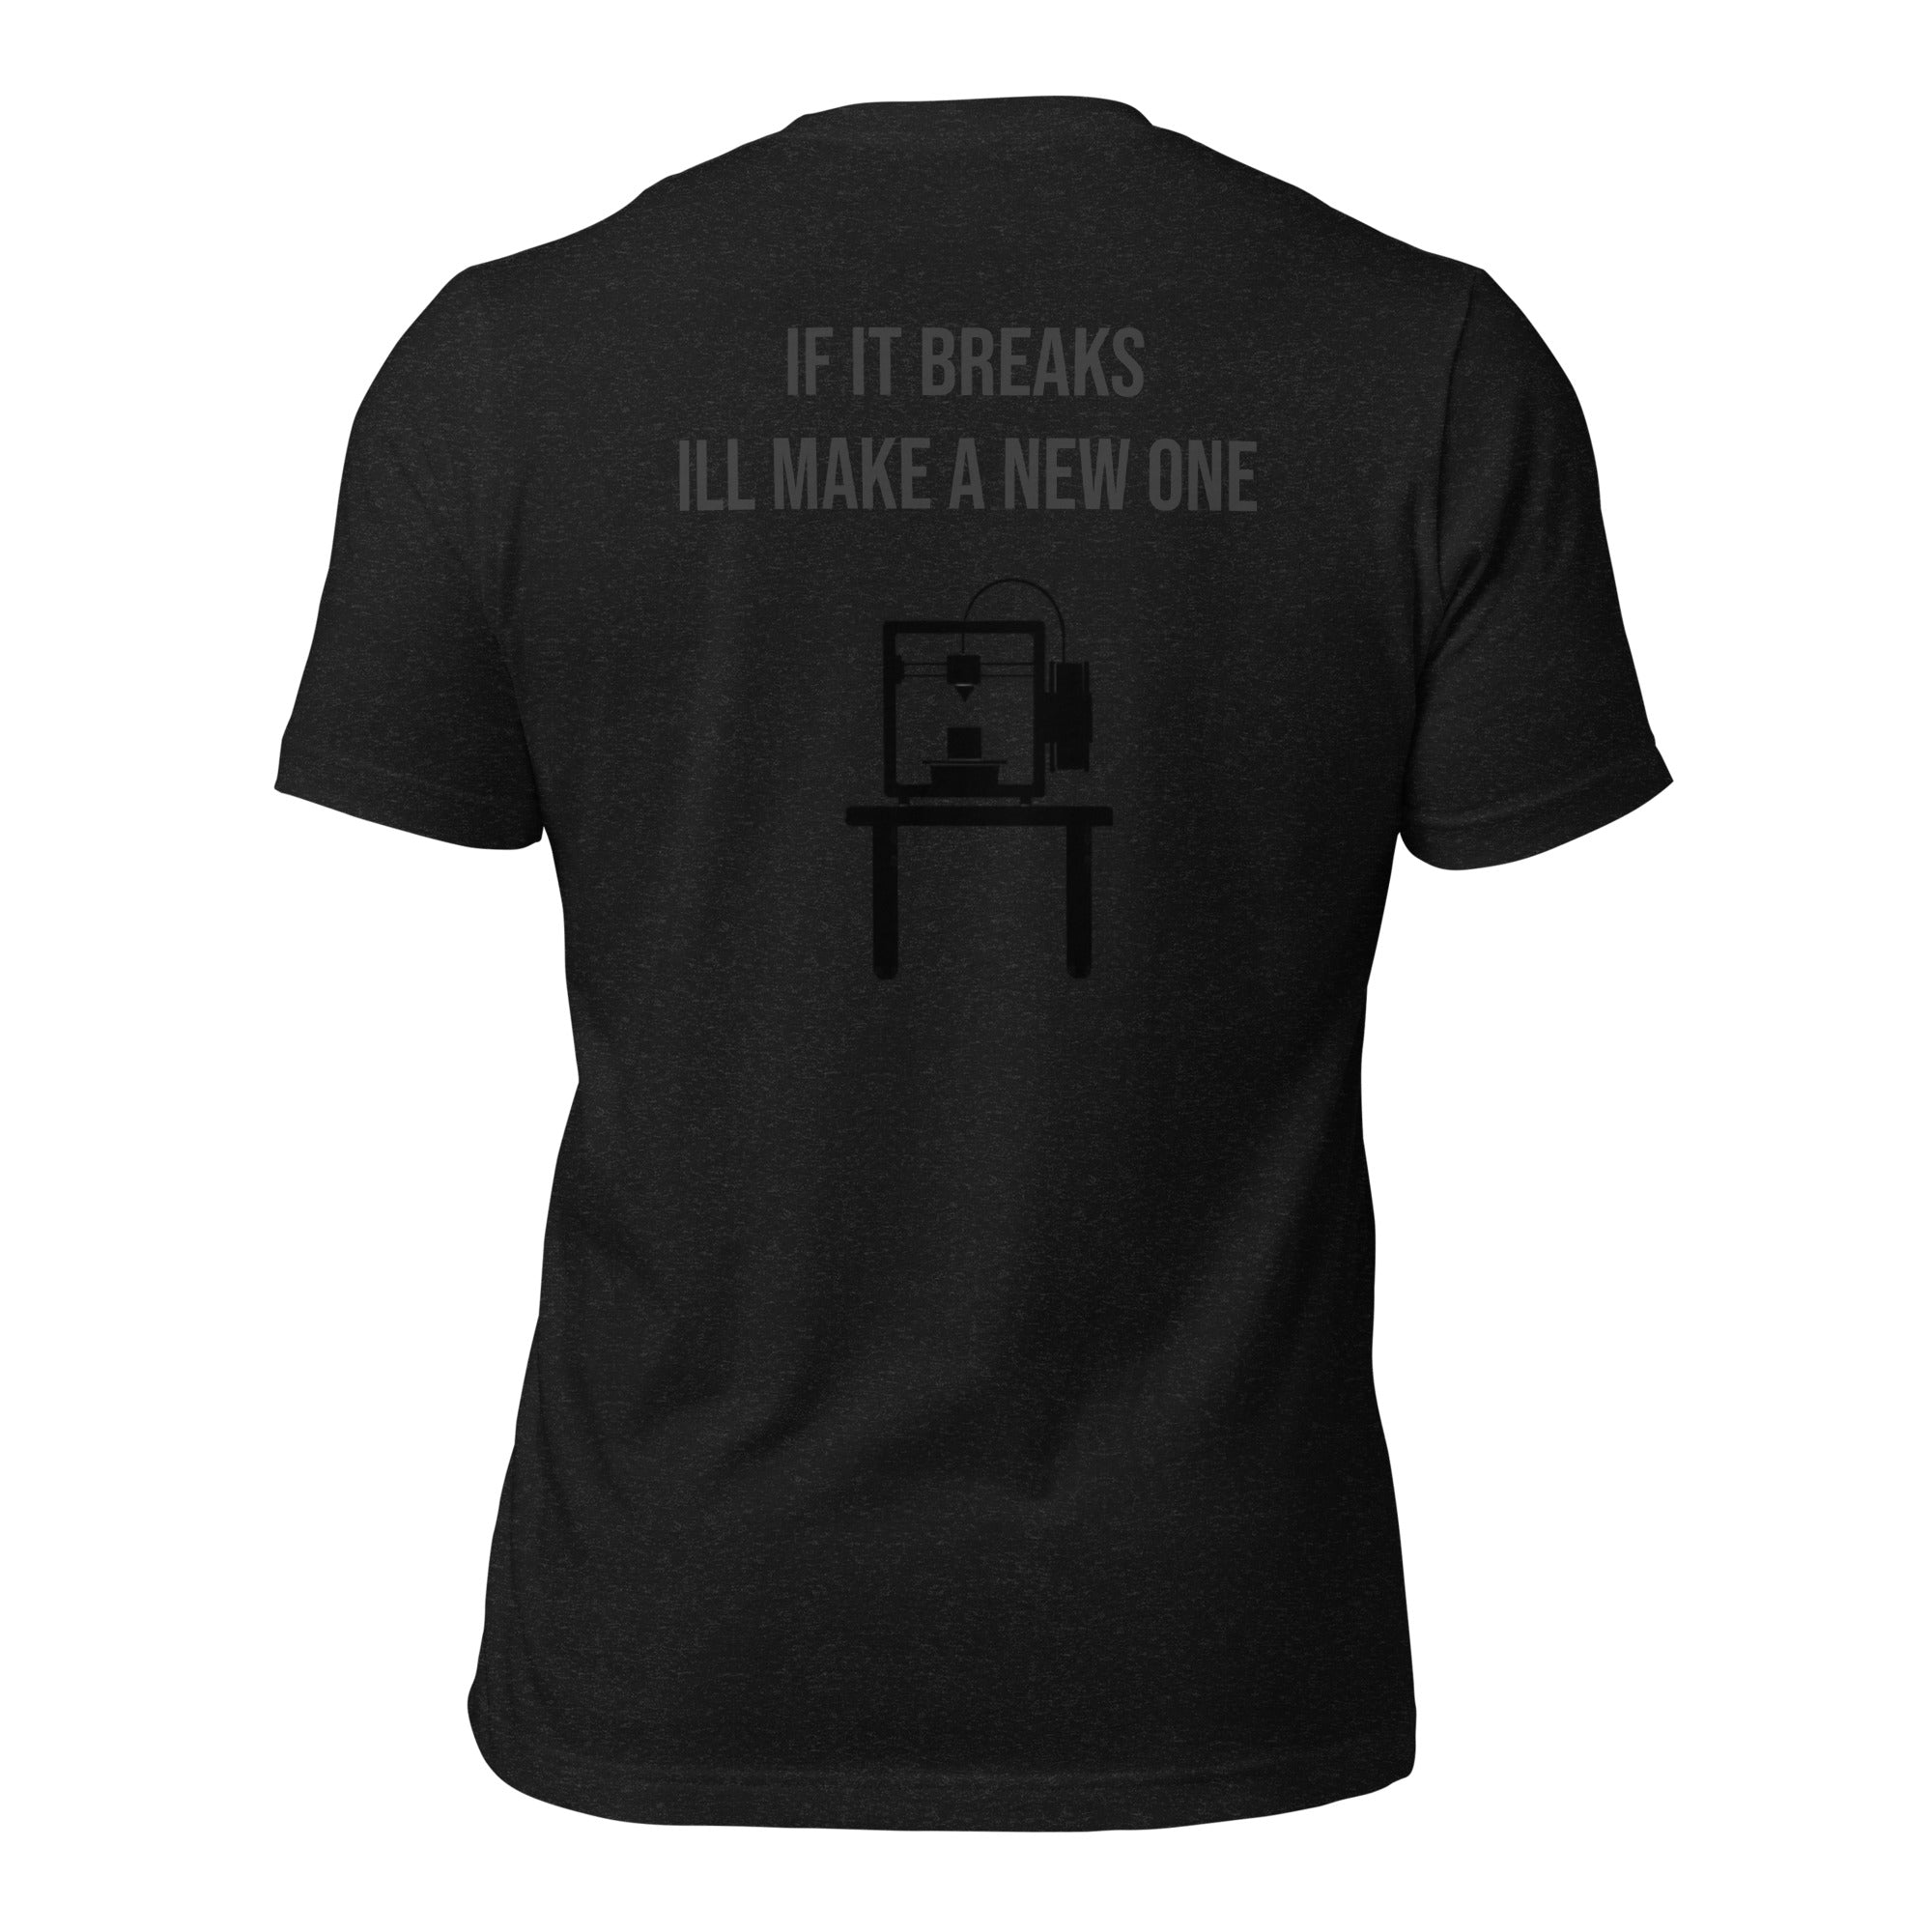 If it breaks ill make a new one 3D Print tshirt